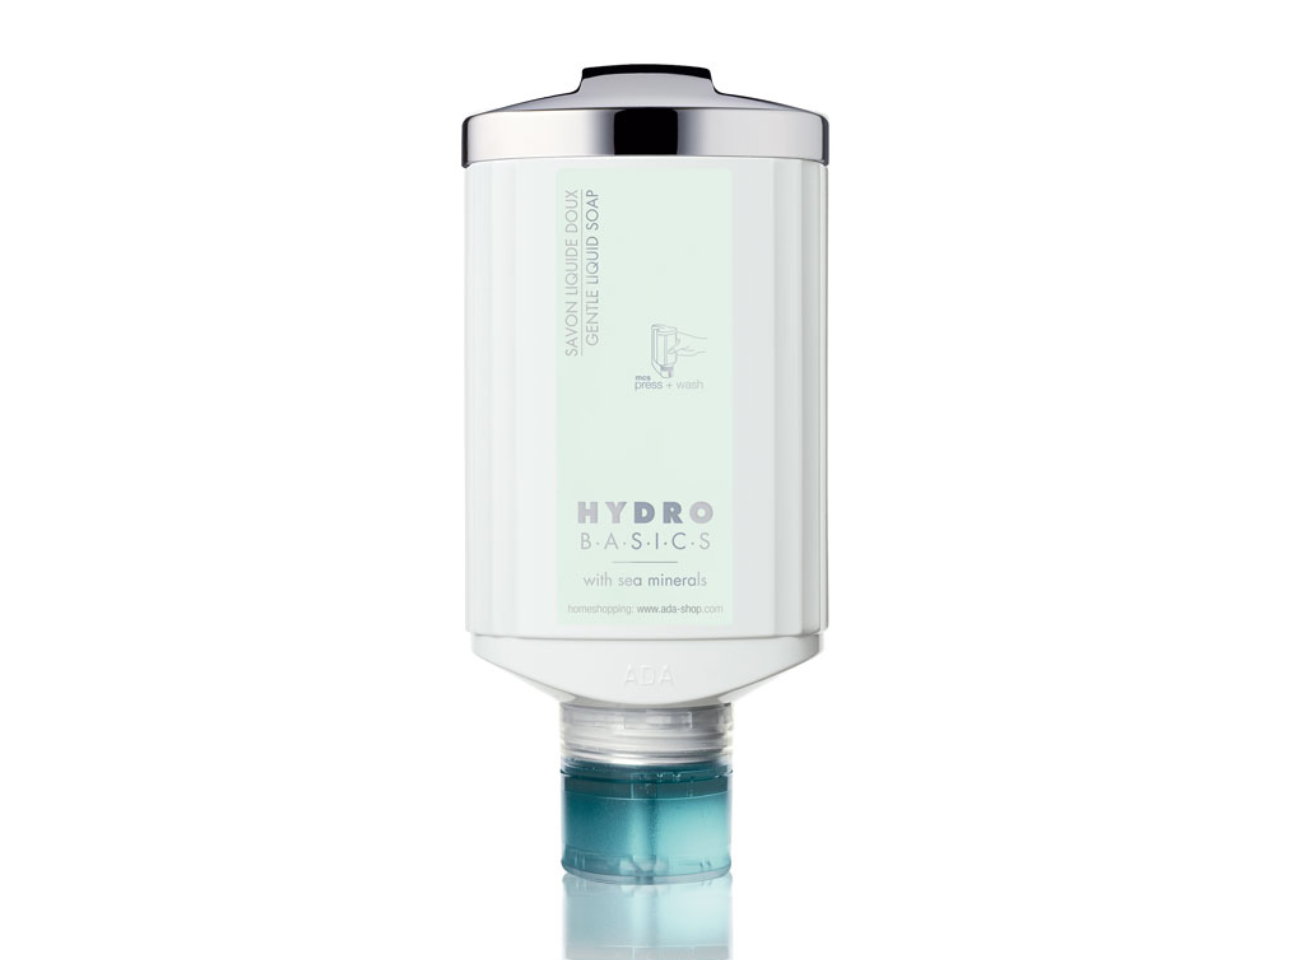 Hydro Basics Milde Flüssigseife - press+wash, 300ml